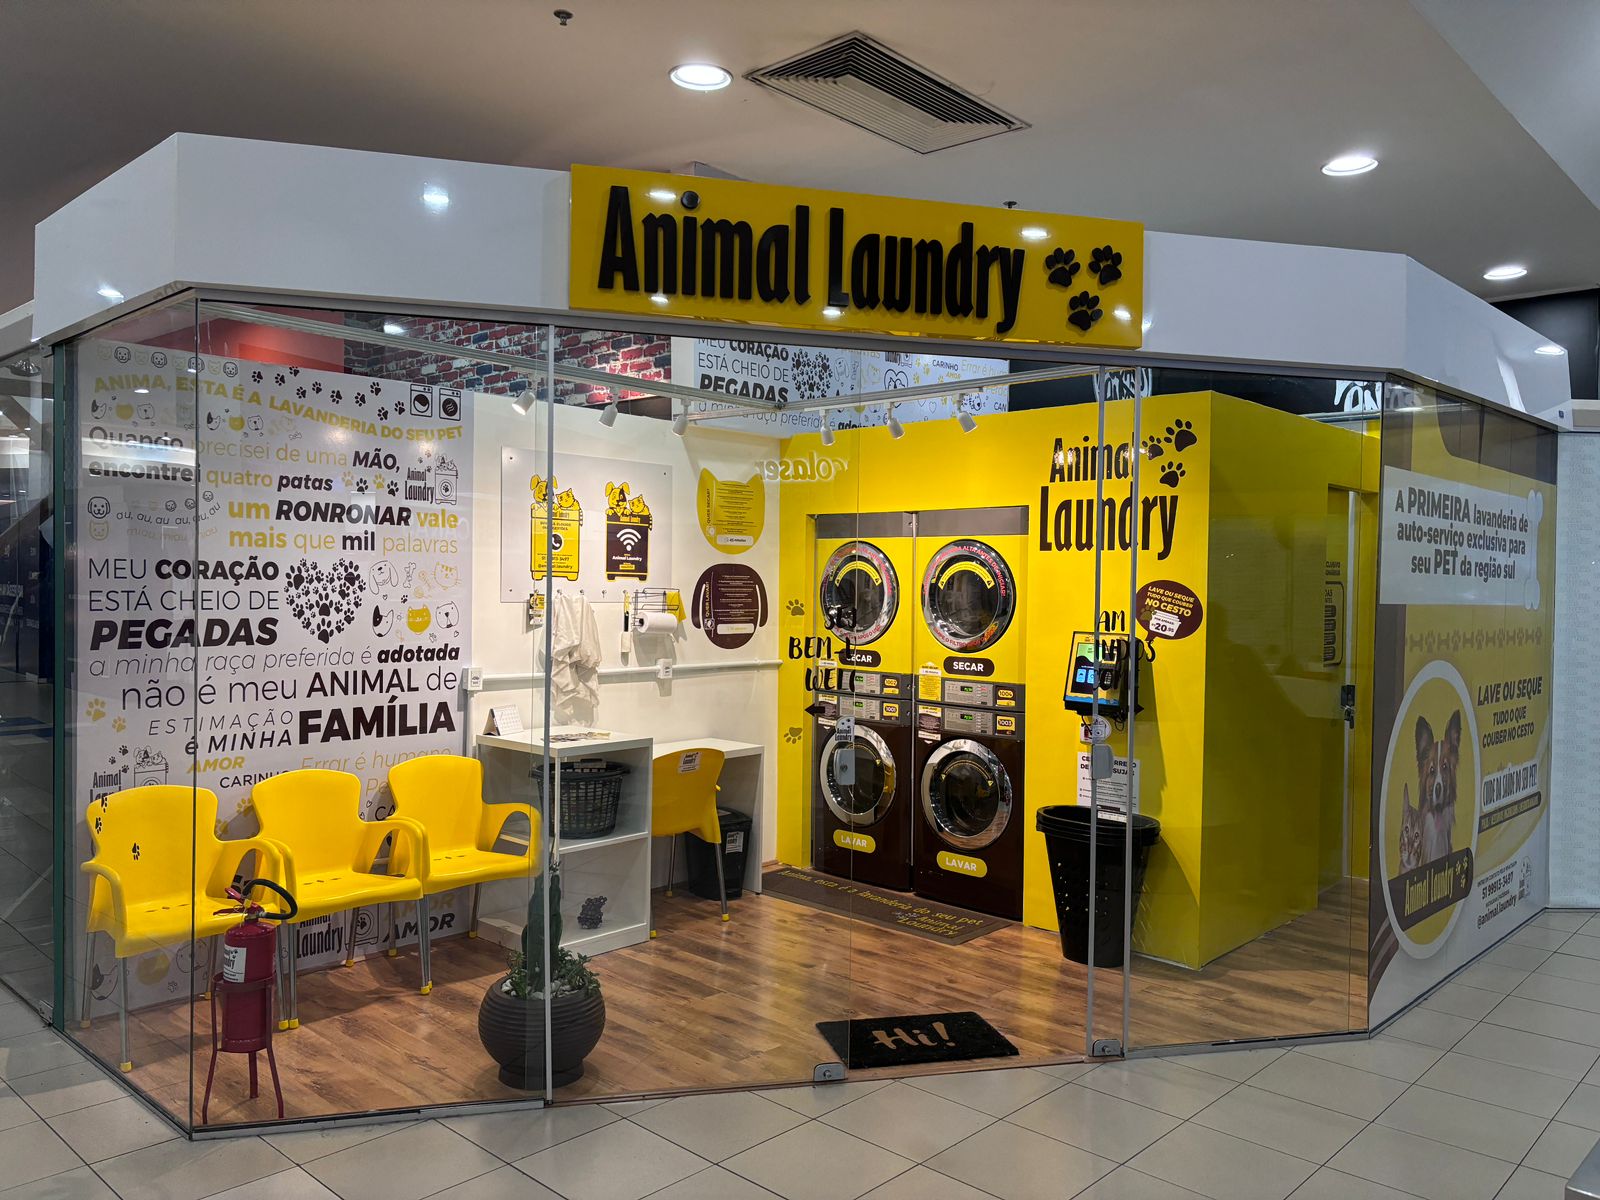 Animal Laundry